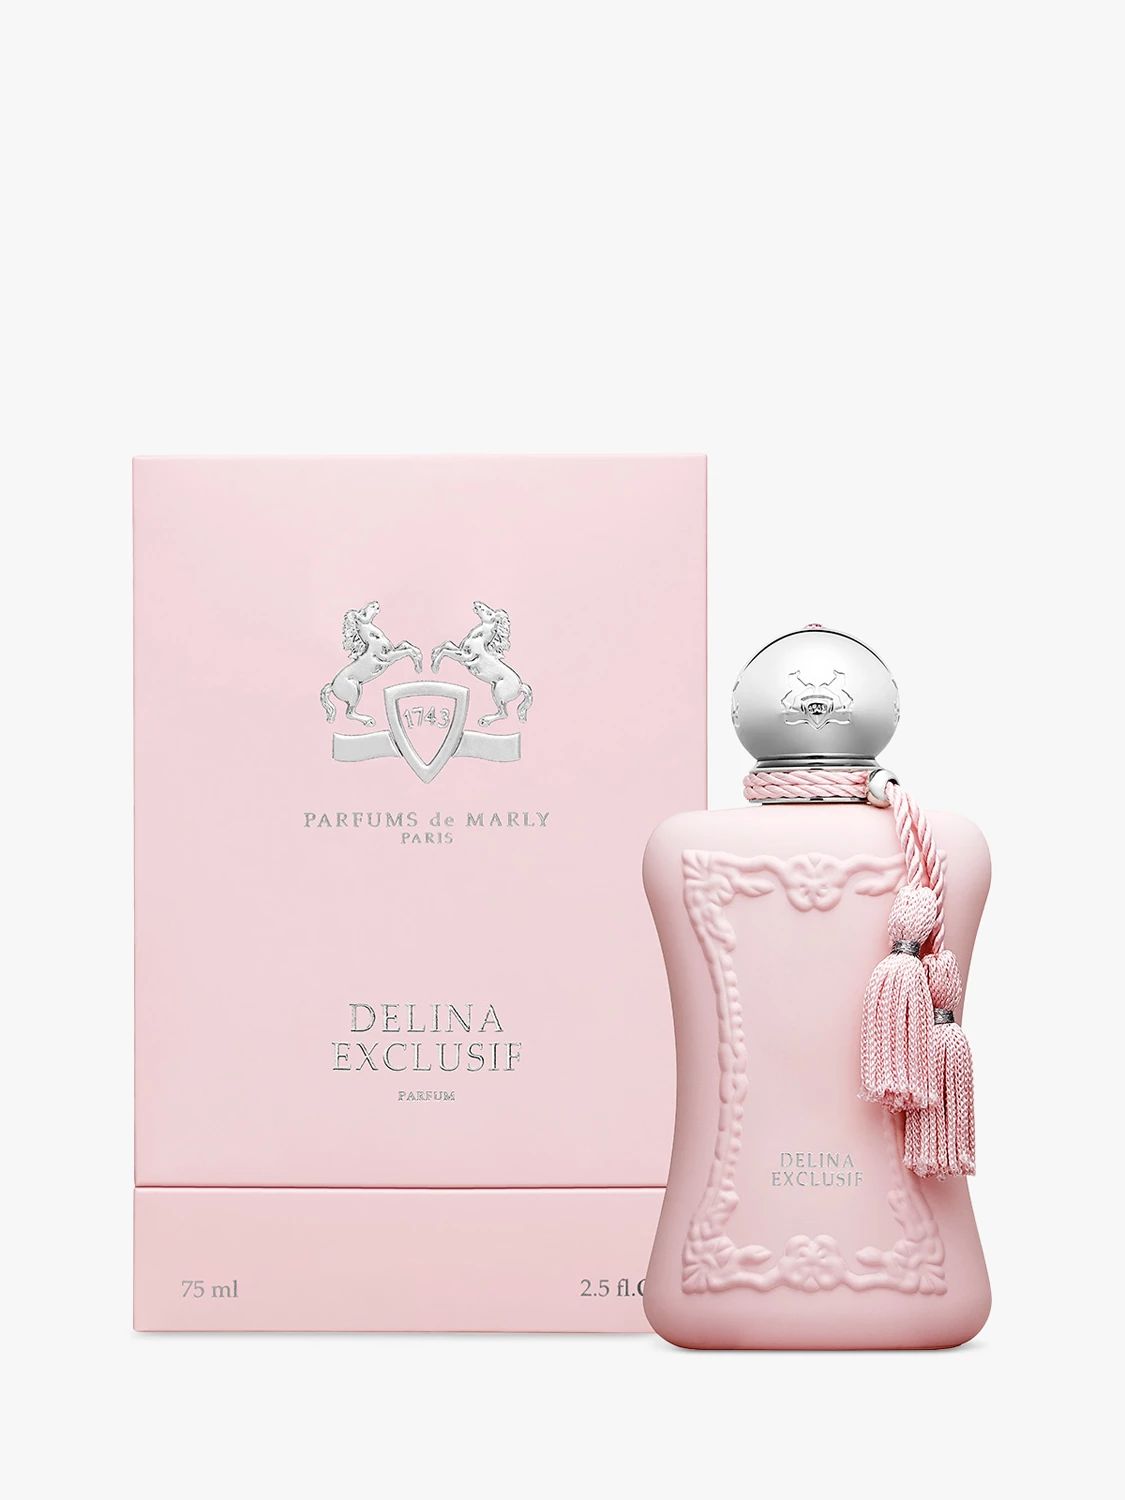 Parfums de Marly Delina Exclusif Parfum, 75ml | John Lewis (UK)